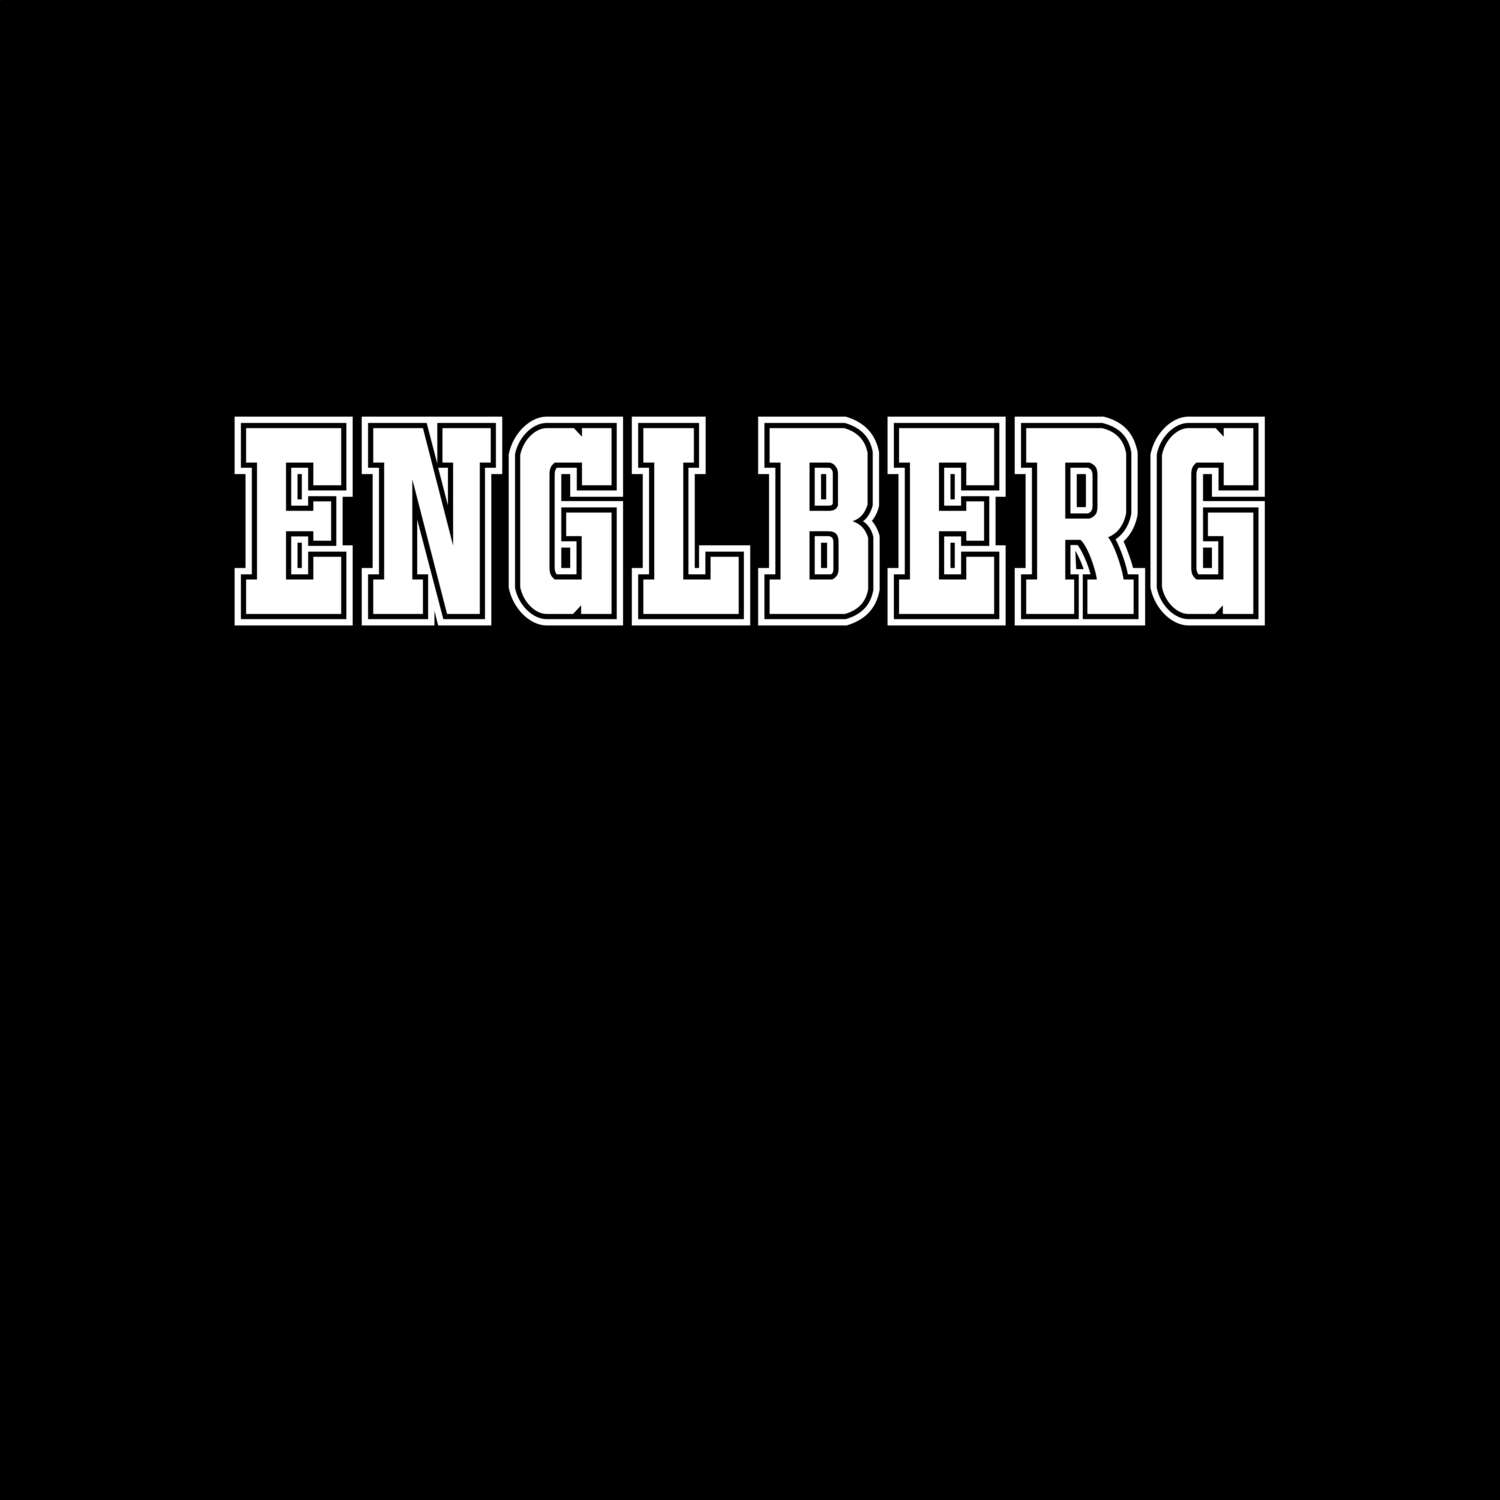 Englberg T-Shirt »Classic«